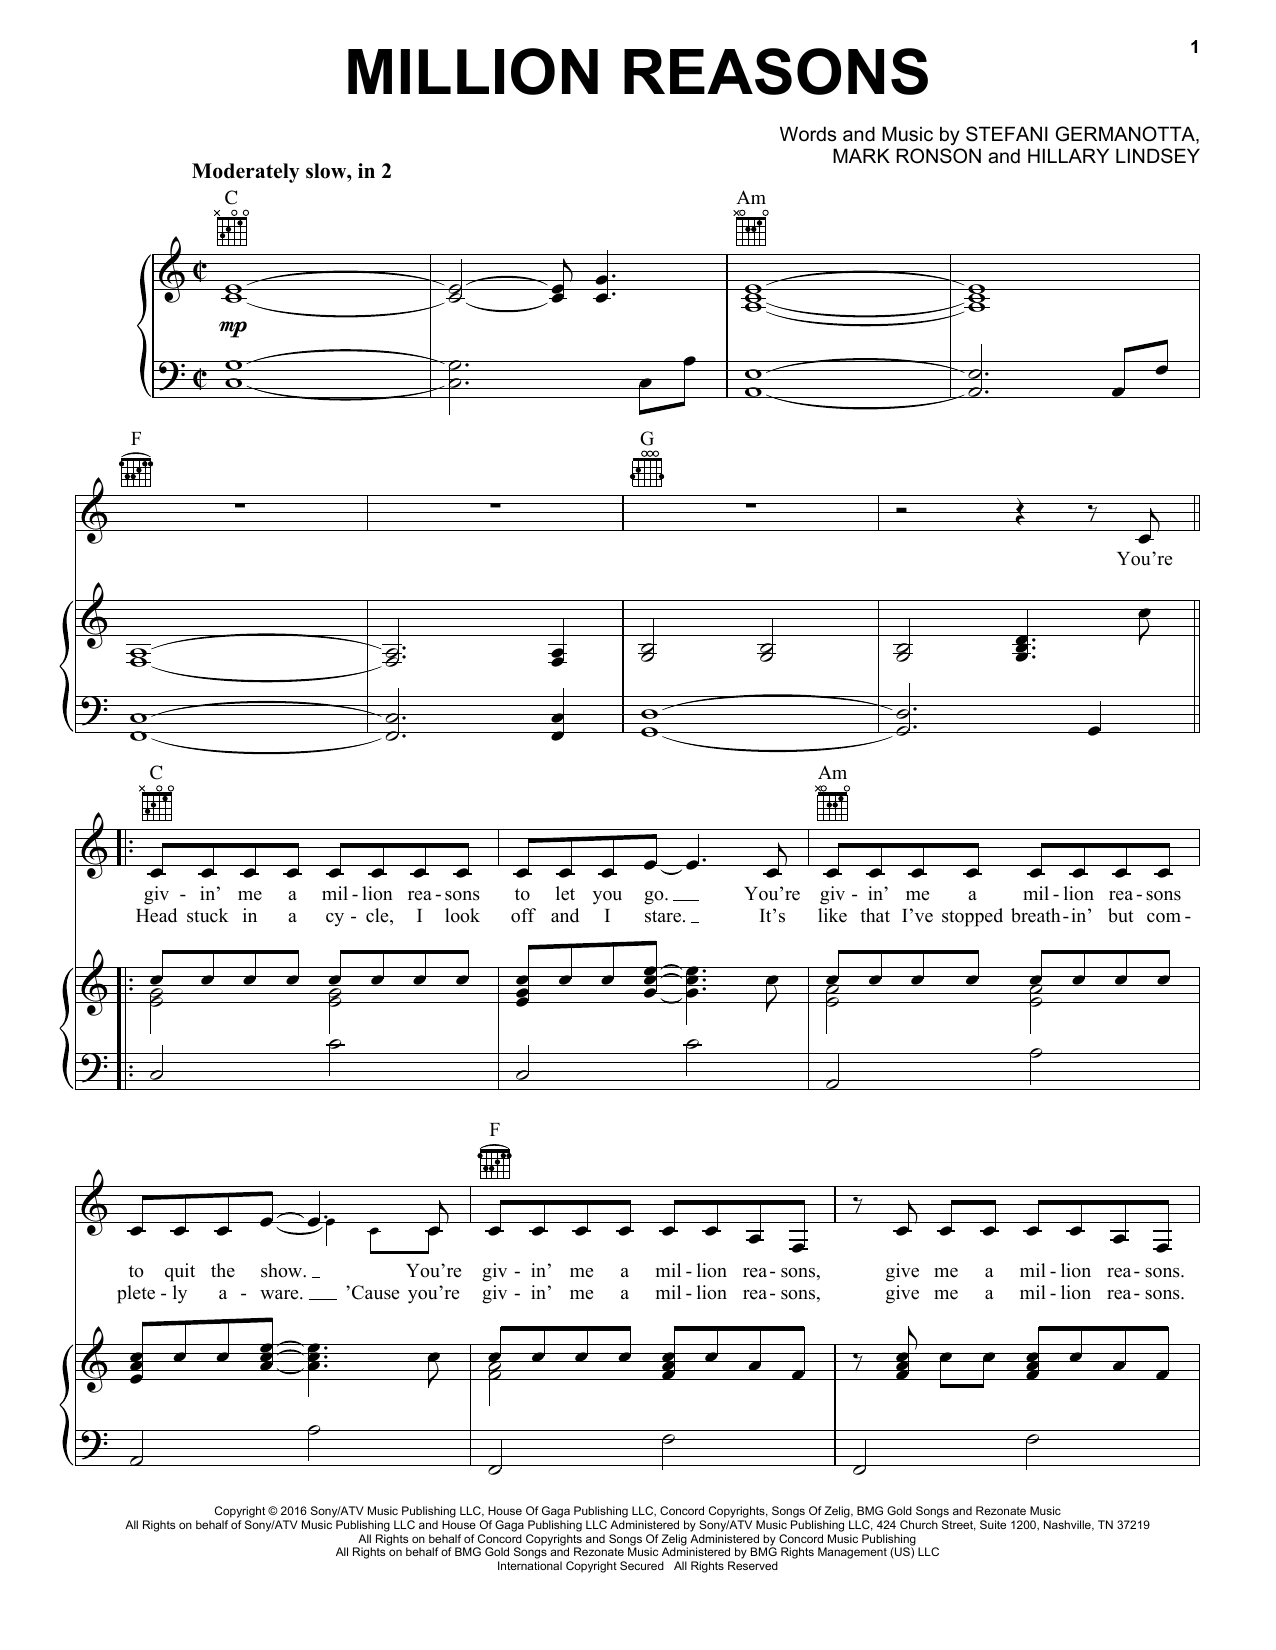 Lady Gaga Million Reasons sheet music notes and chords arranged for ChordBuddy